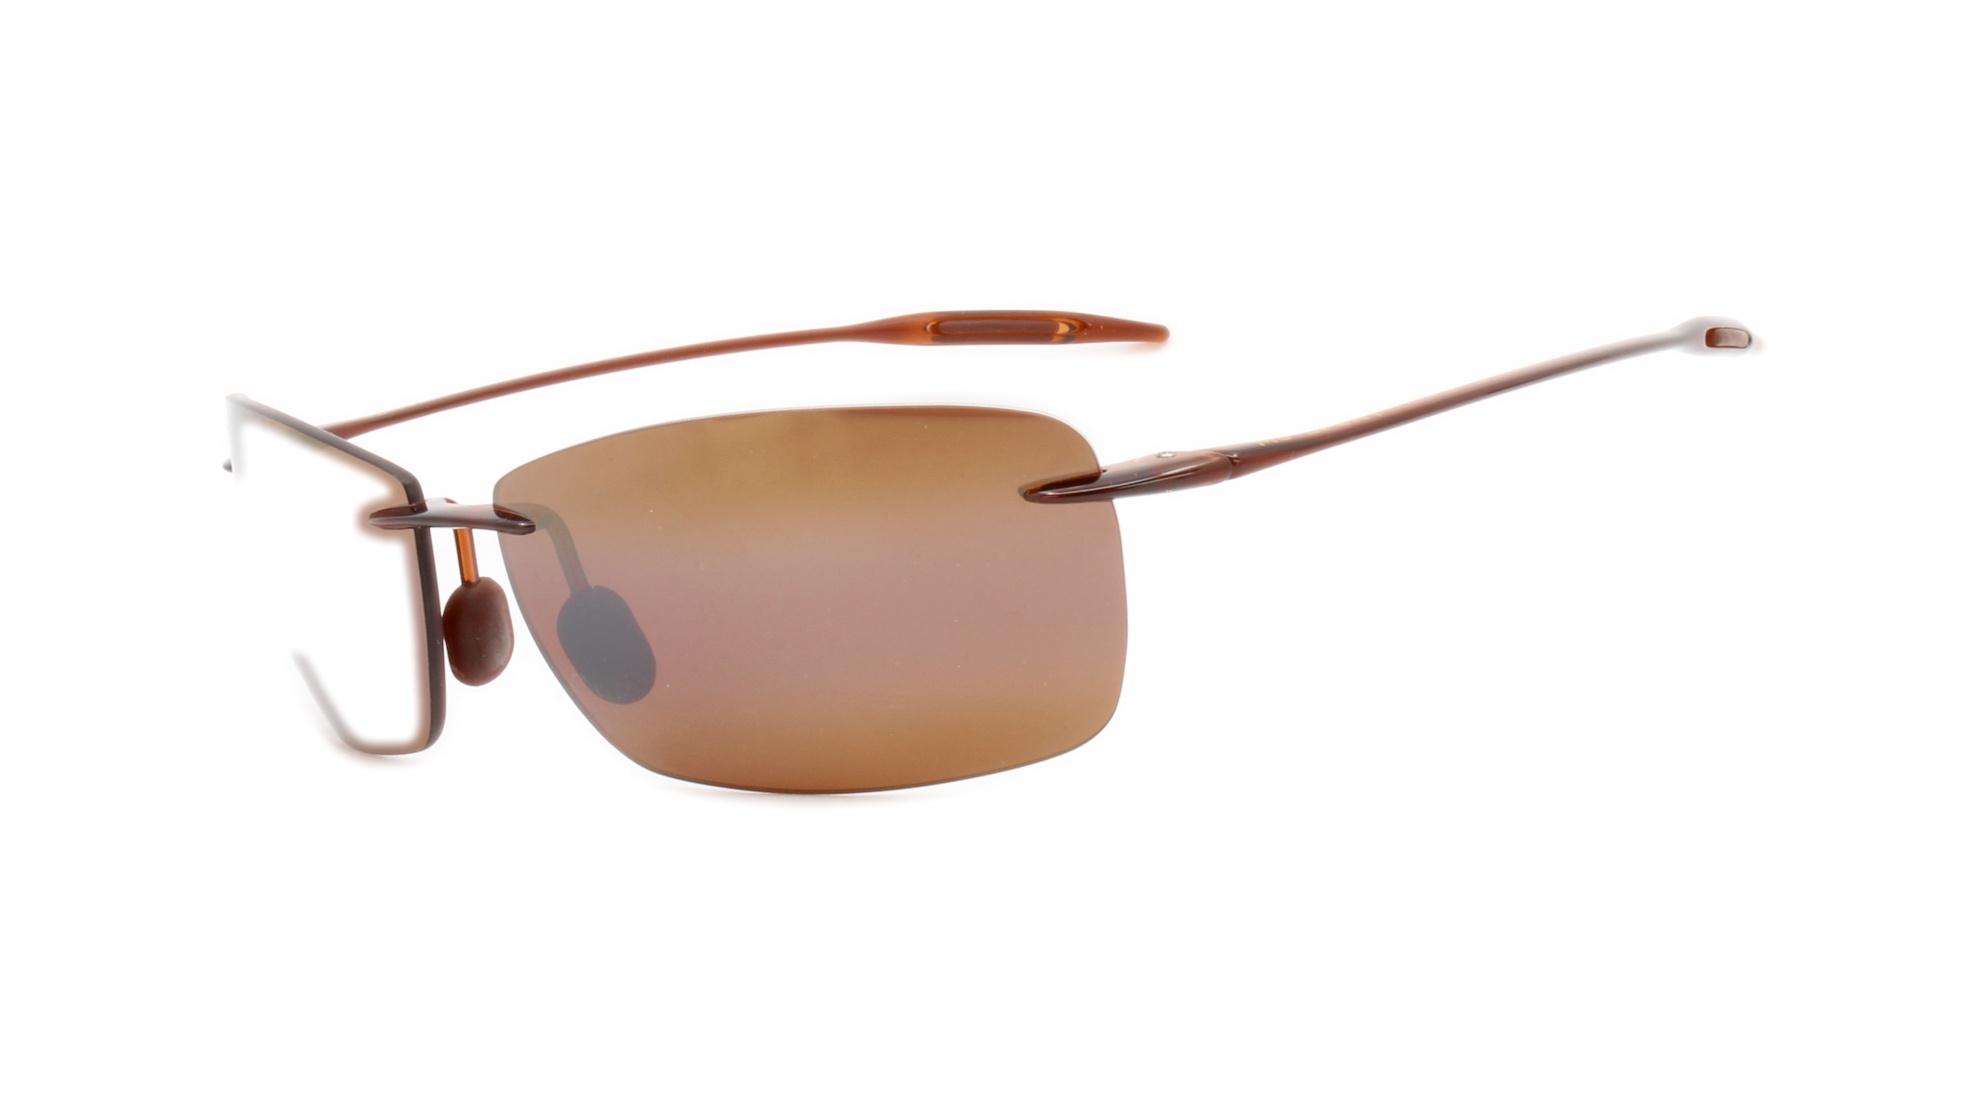 Sunglasses Maui-jim H423, brown colour - Doyle